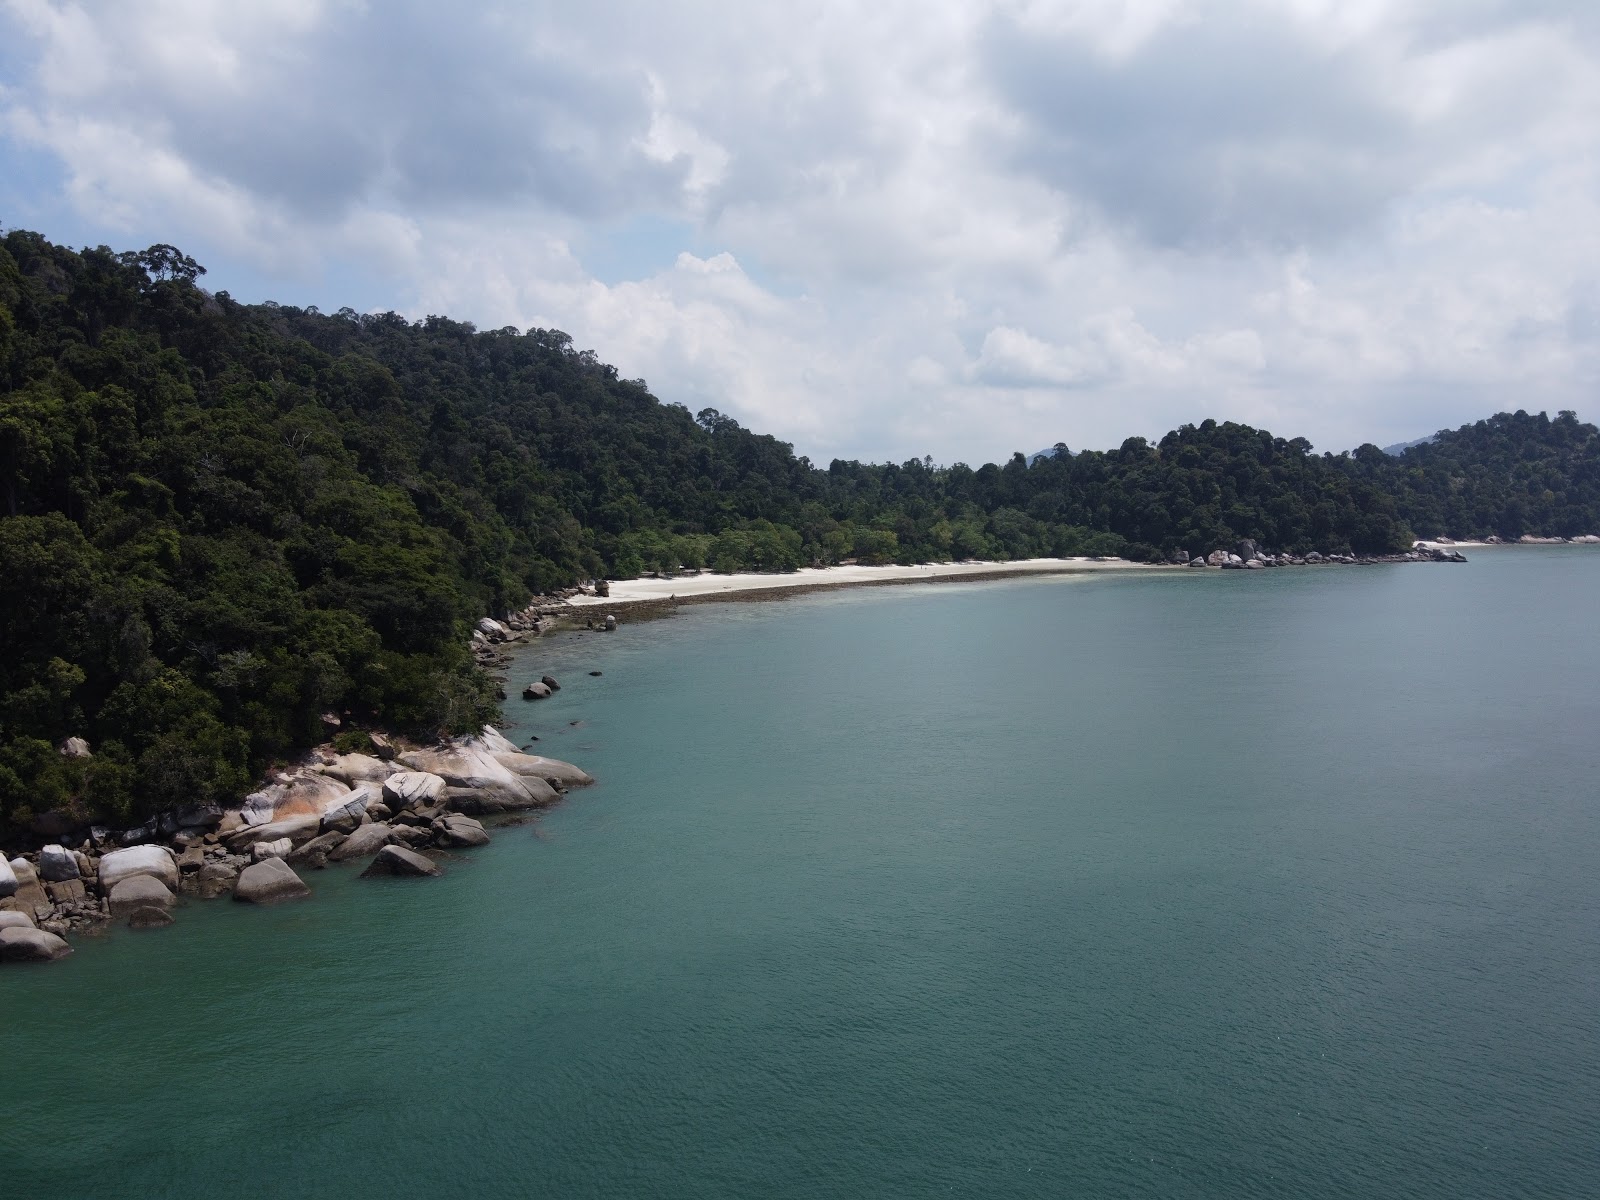 Foto de Teluk Segadas Beach - lugar popular entre os apreciadores de relaxamento